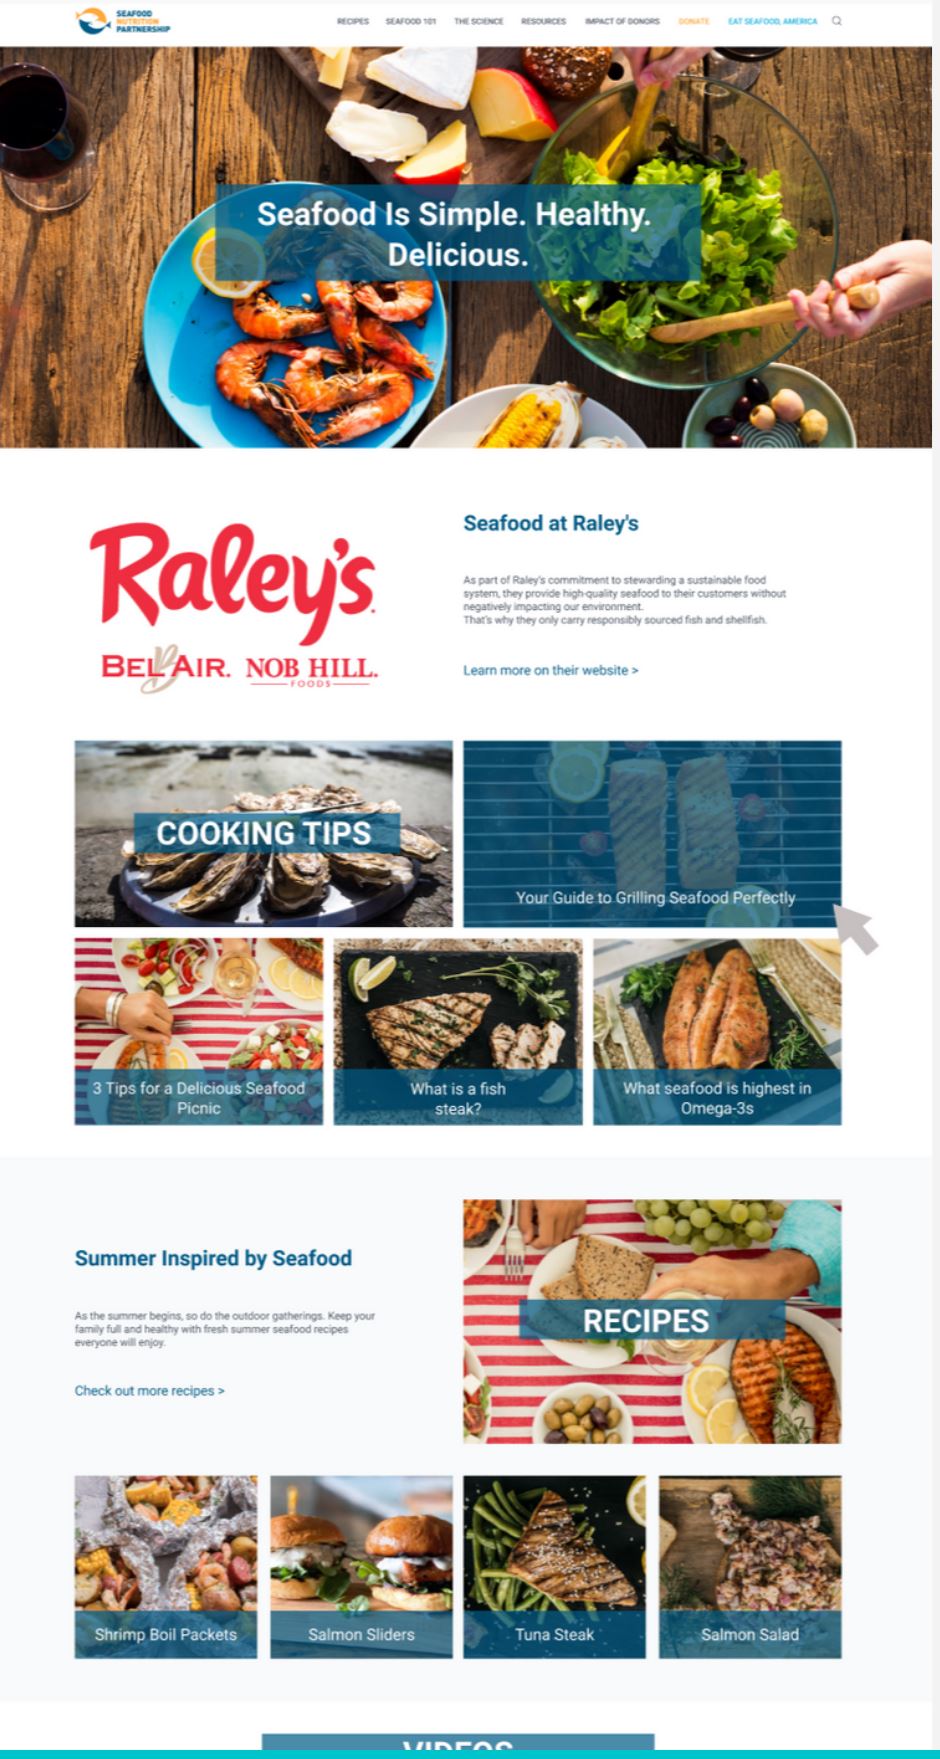 Raley's seafood Education Photo 1.JPG